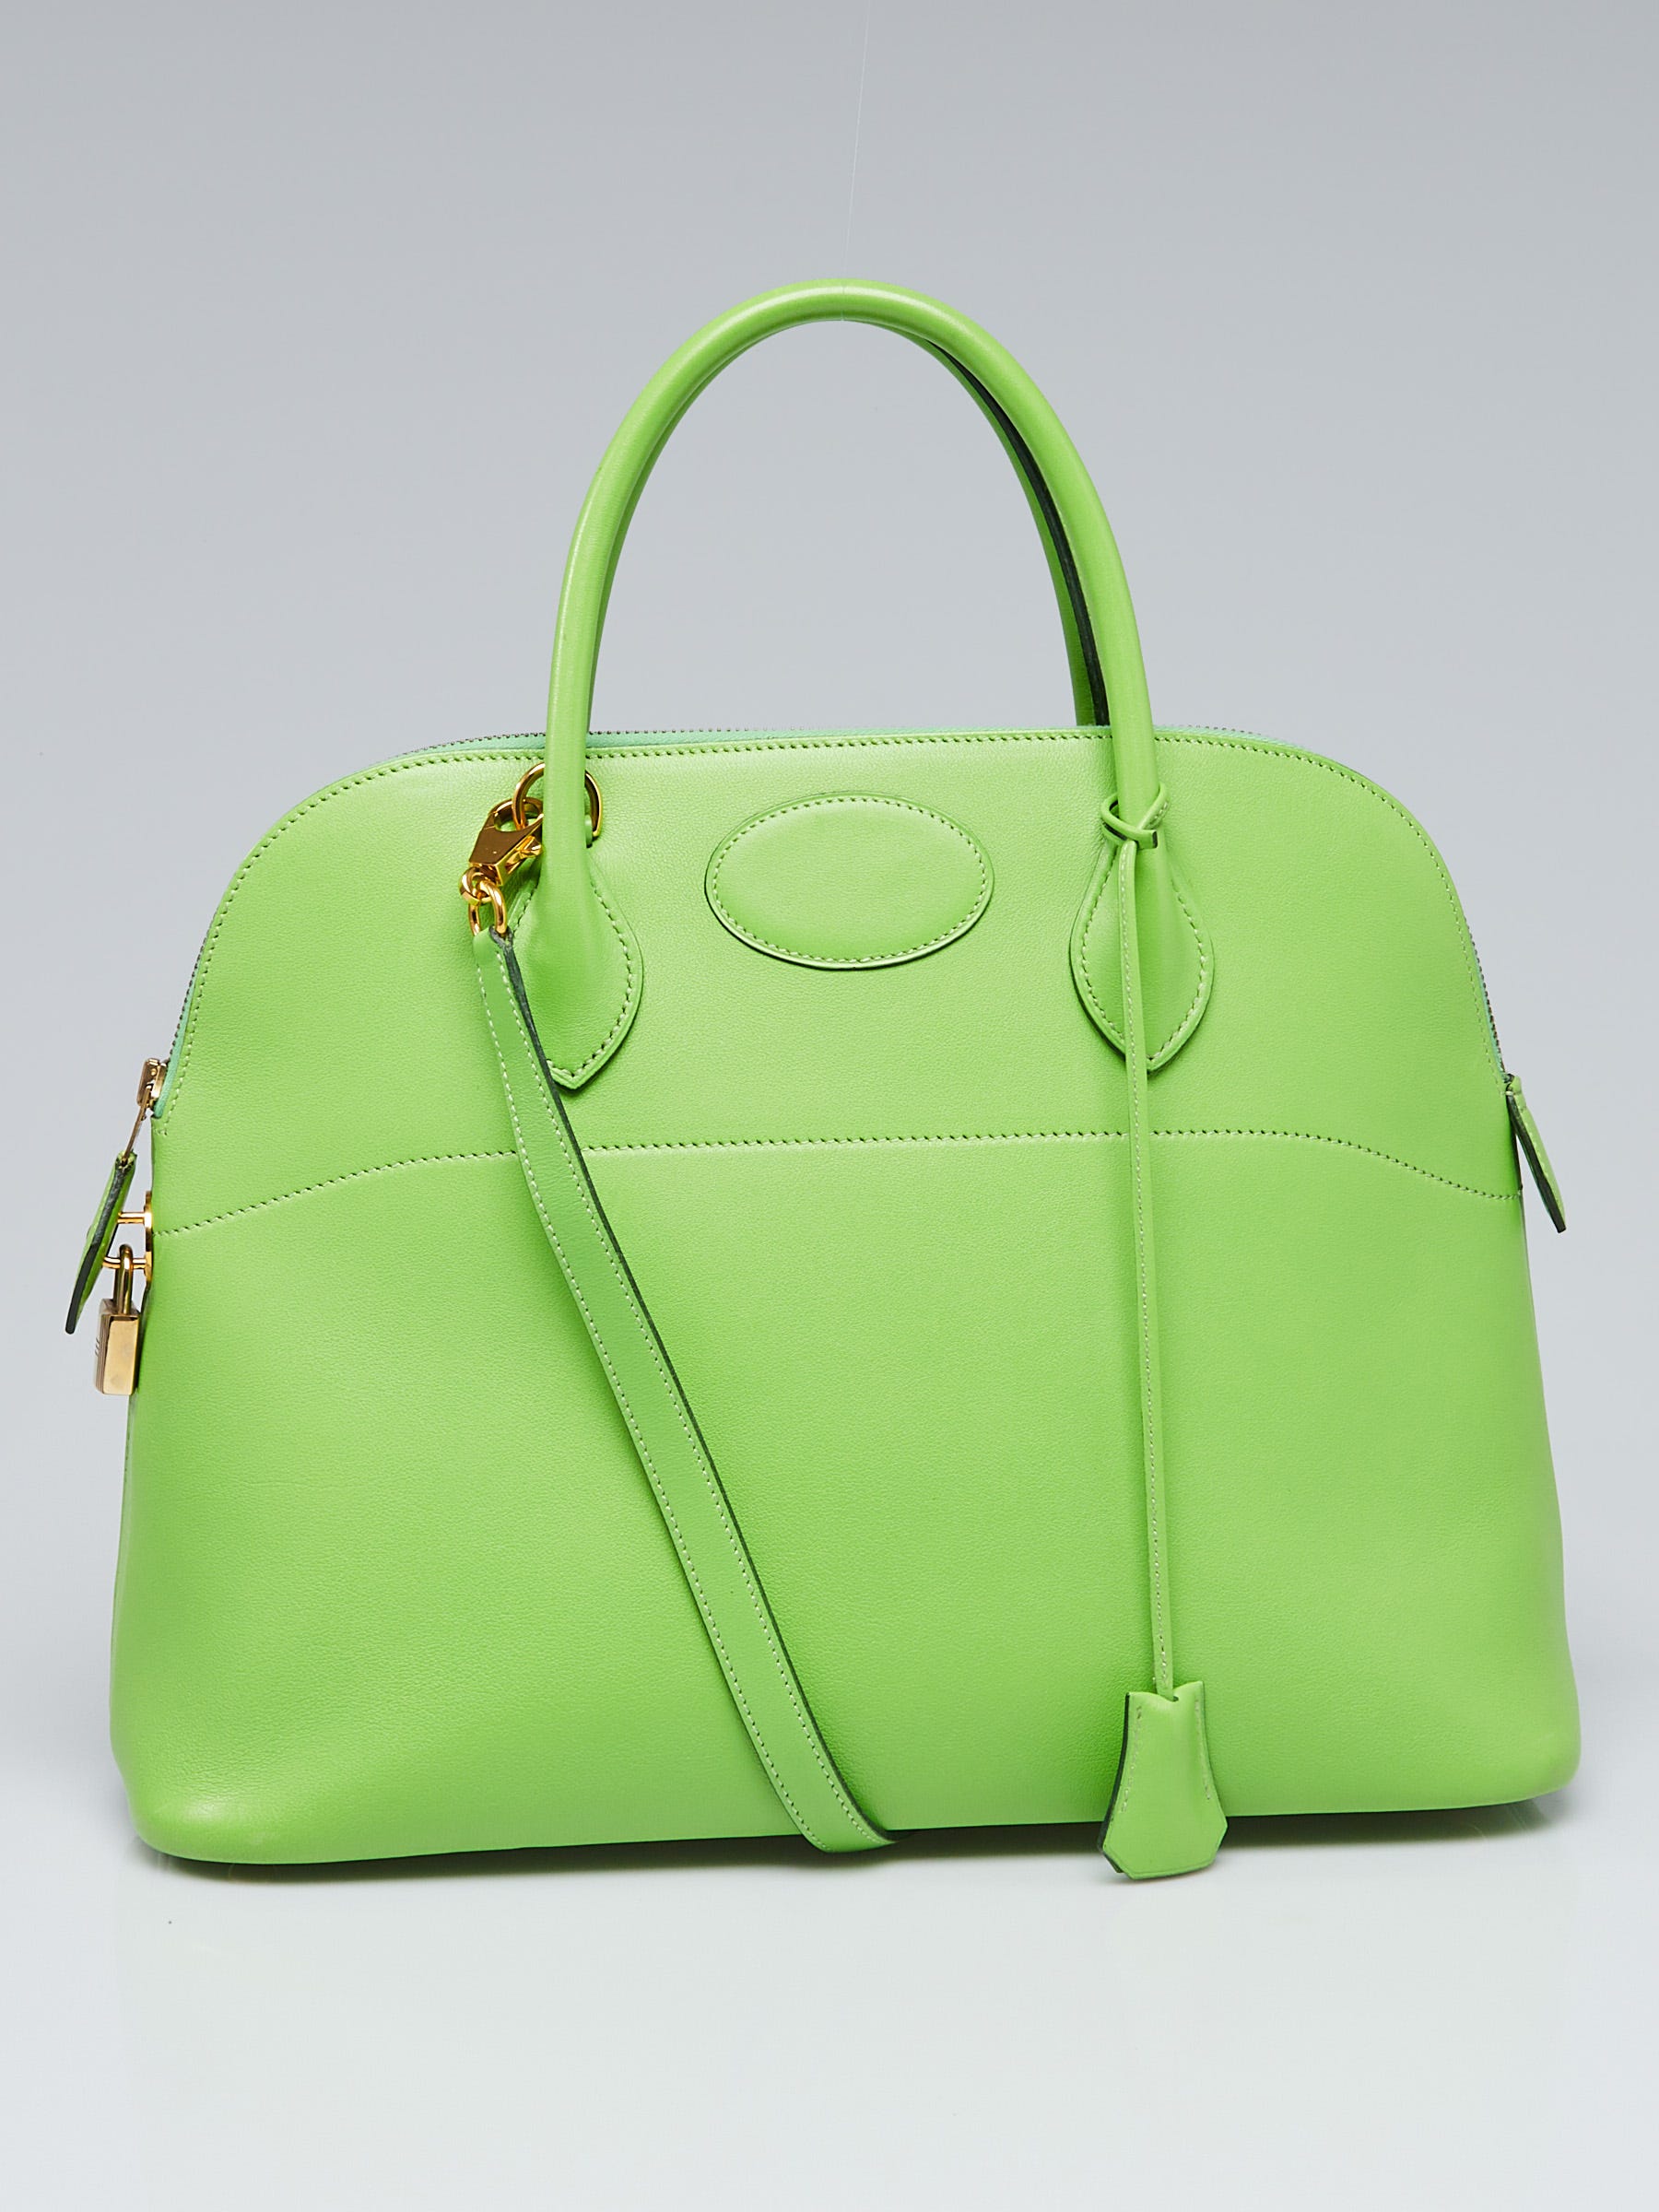 High Quality Louis Vuitton Bags: Hermes Bolide Bag